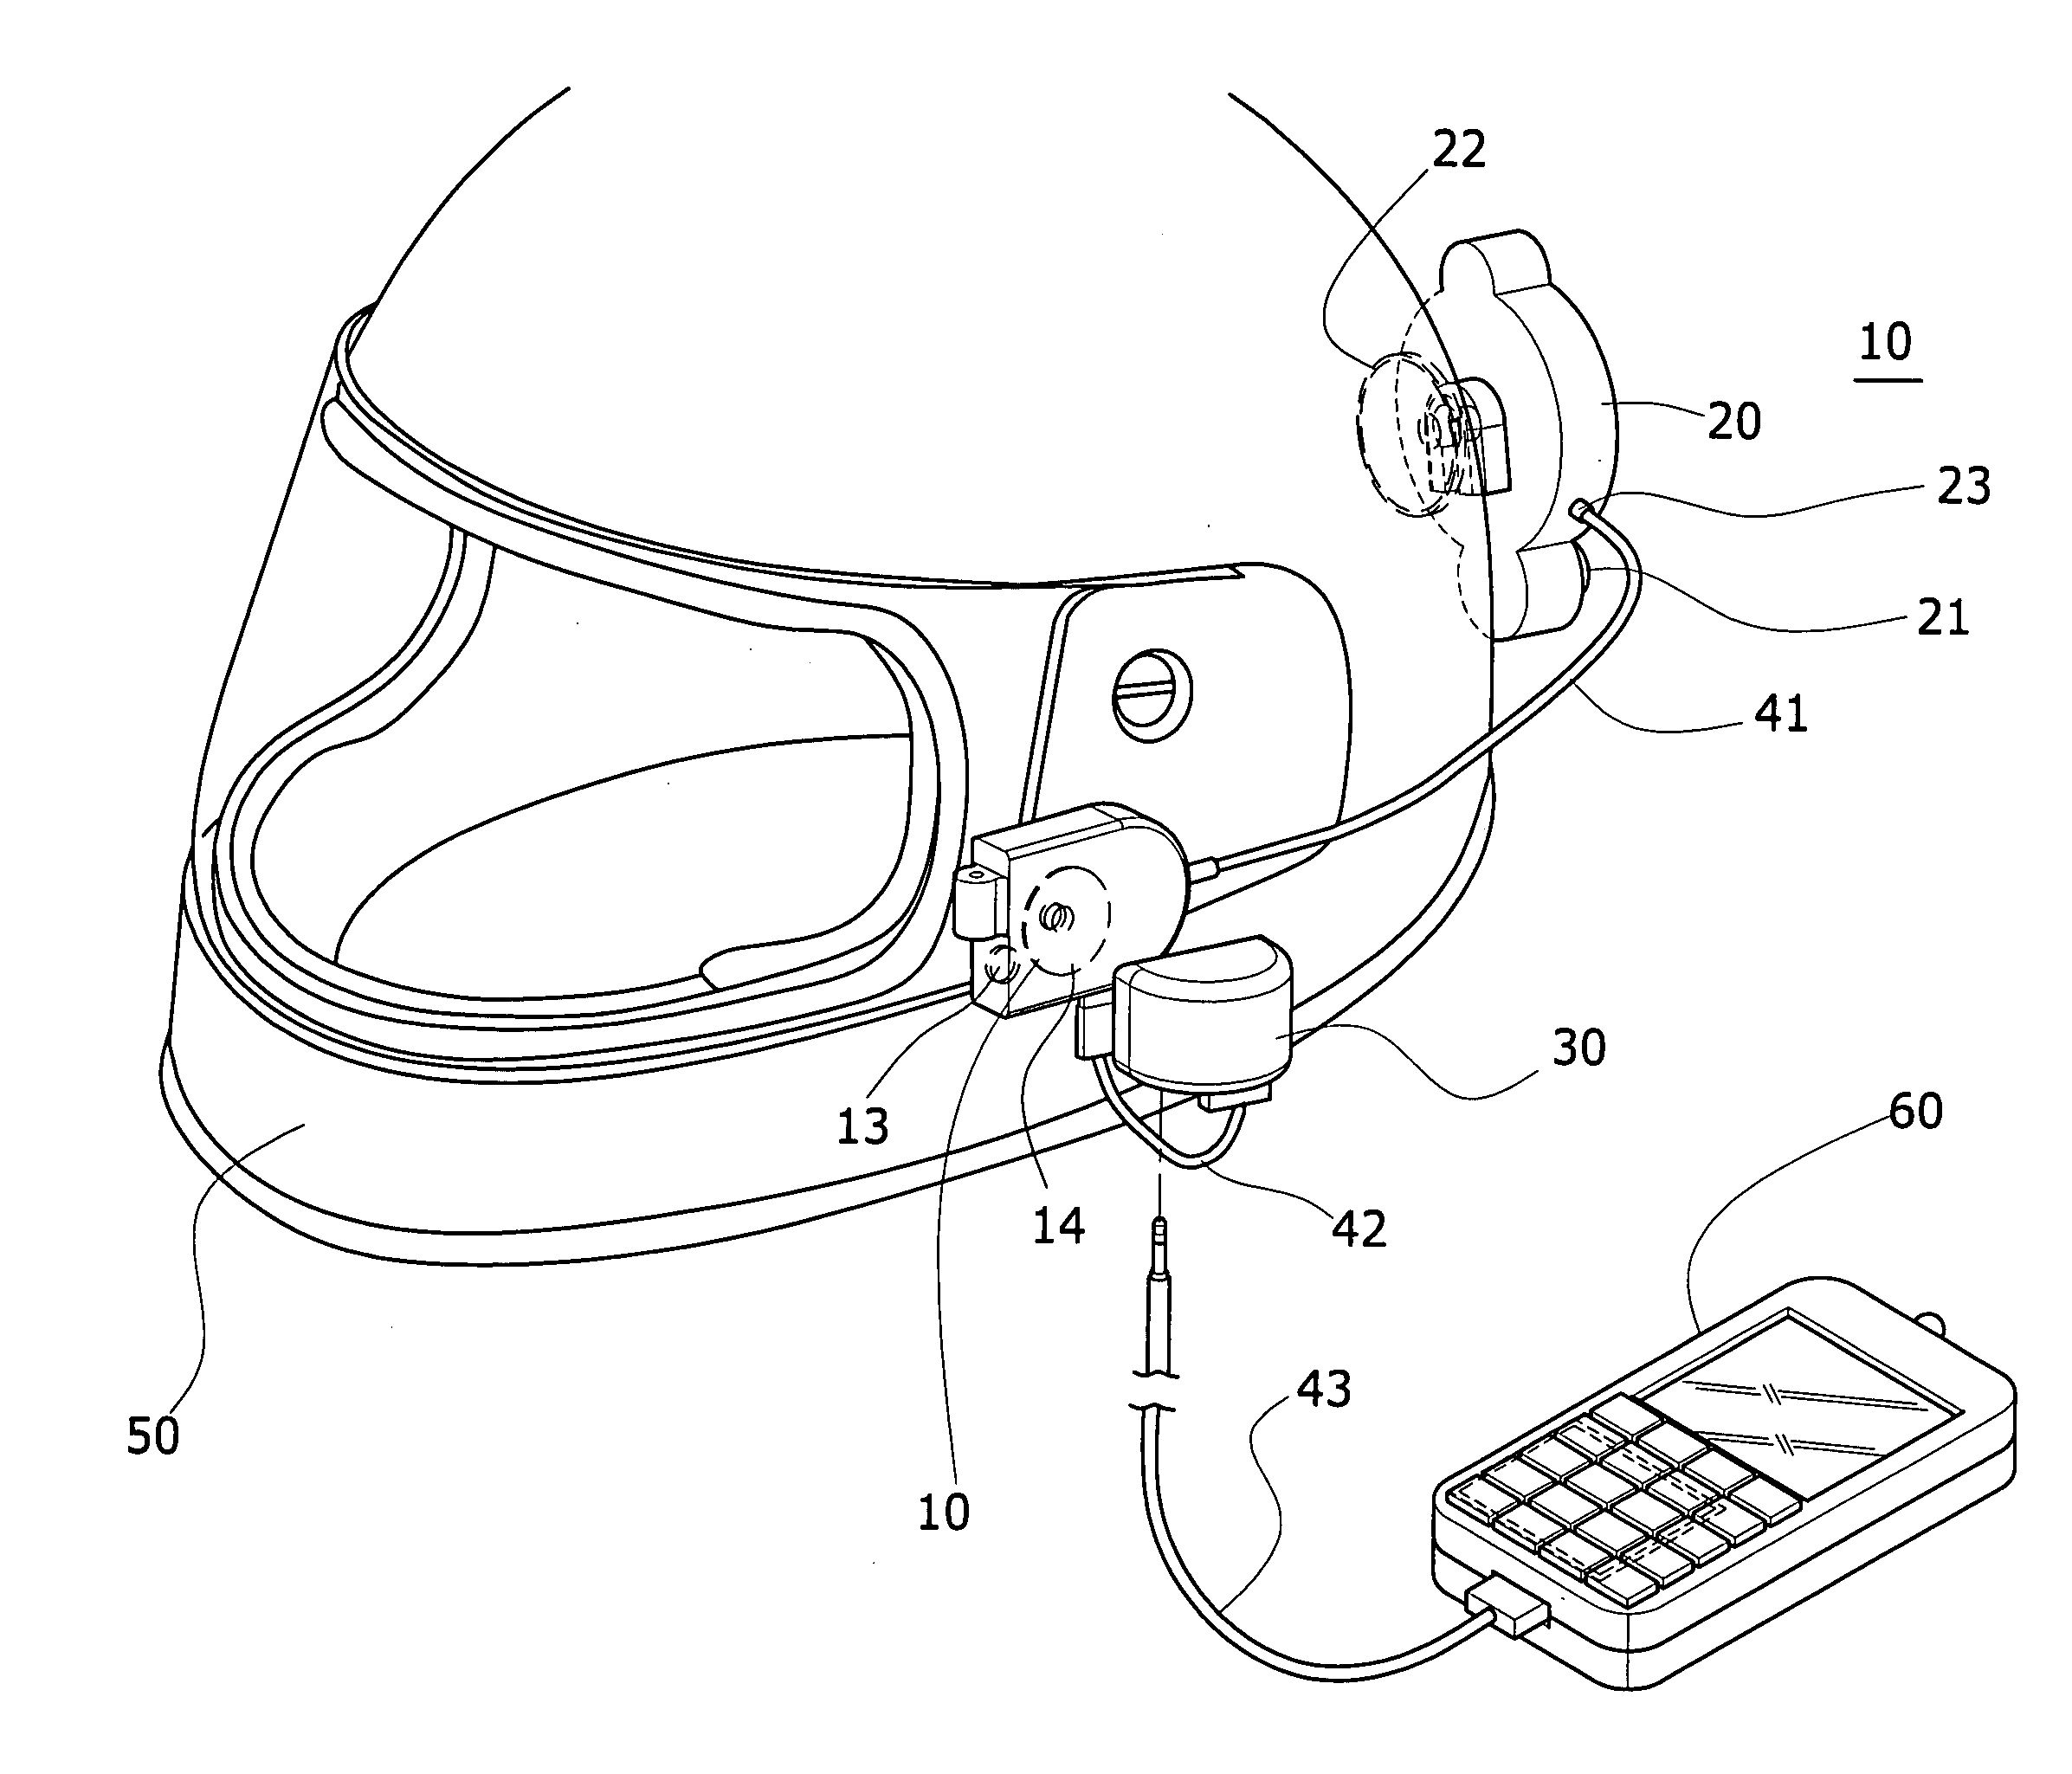 Helmet communication device